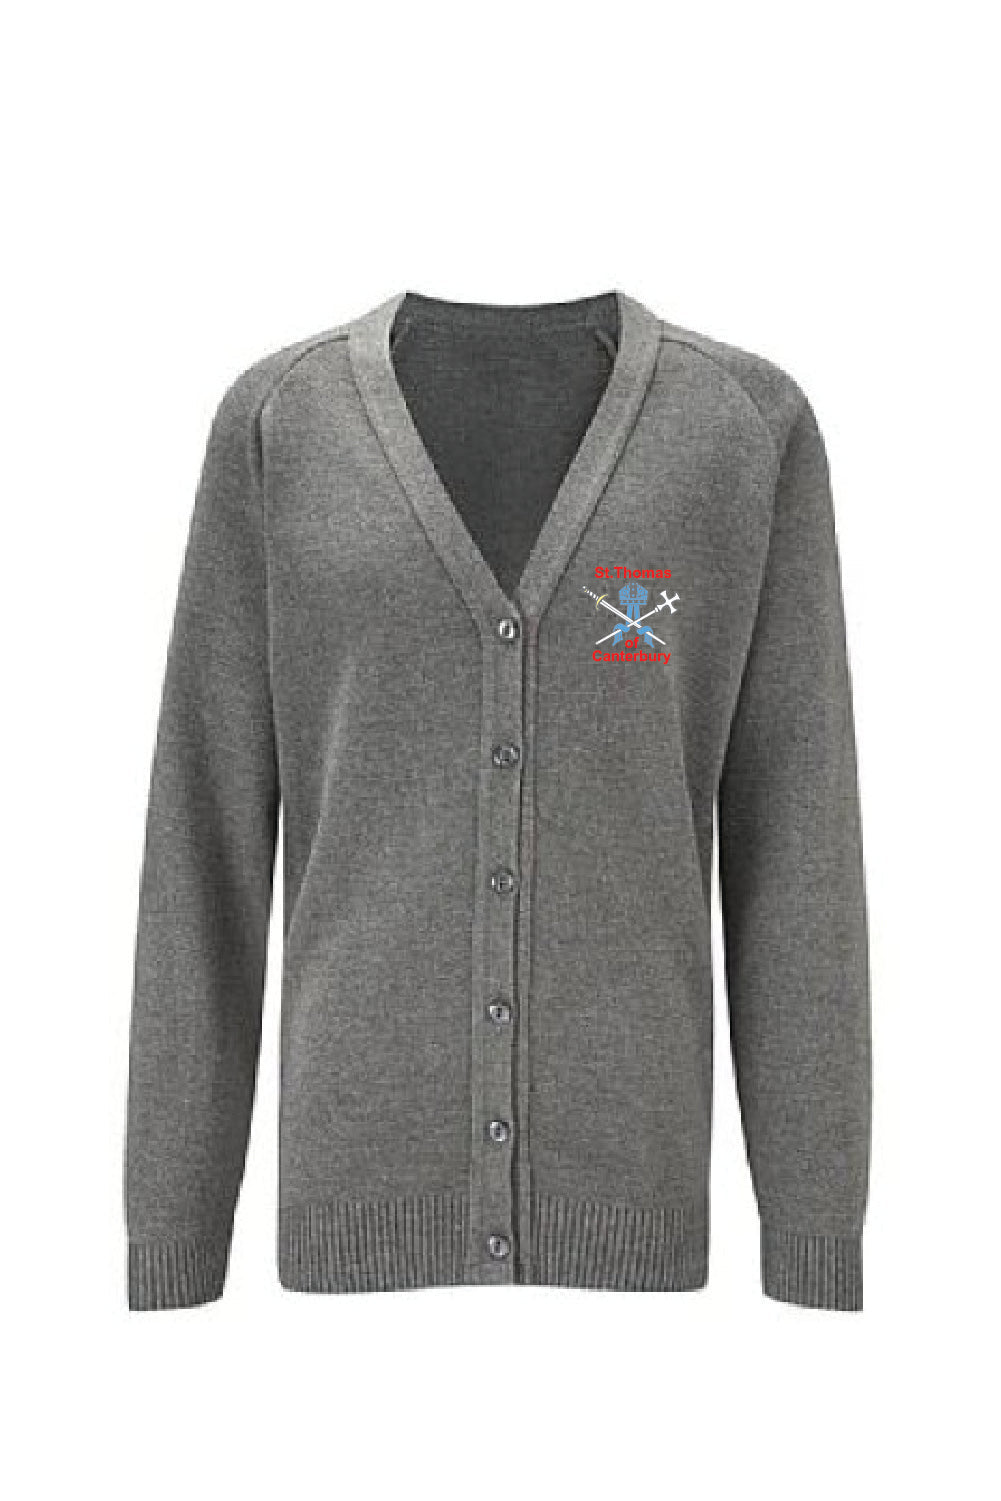 St Thomas Knitted Cardigan - Uniformwise Schoolwear